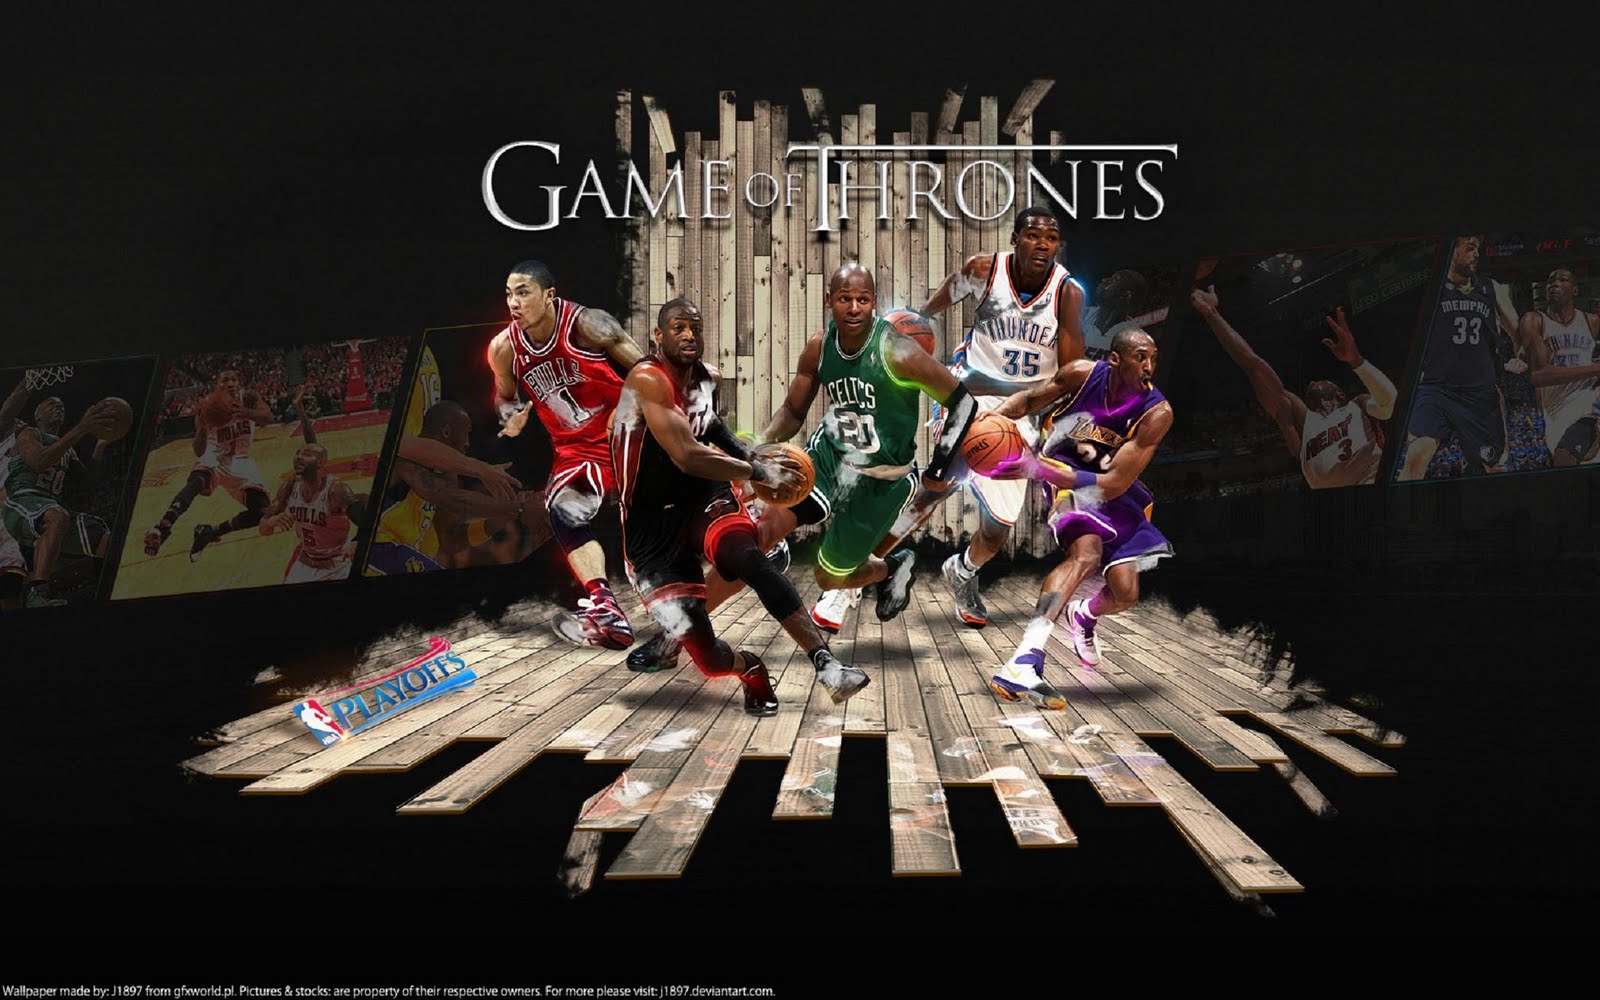 https://blogger.googleusercontent.com/img/b/R29vZ2xl/AVvXsEhAwk6-9tg8gBOgdMnOOmQWKnOfqHoQJXL2cmOPvOoJqNf4erSsisvKqgqav0eIb0fdauvLGjnhIkYyHd3fRRtvKZp2B7zKZdXk9YtCek76ELkvAjB33zIRMG5TjzoCY2hiUrXb2NVaVYI/s1600/2011-NBA-Playoffs-Game-Of-Thrones-Wallpaper.jpg